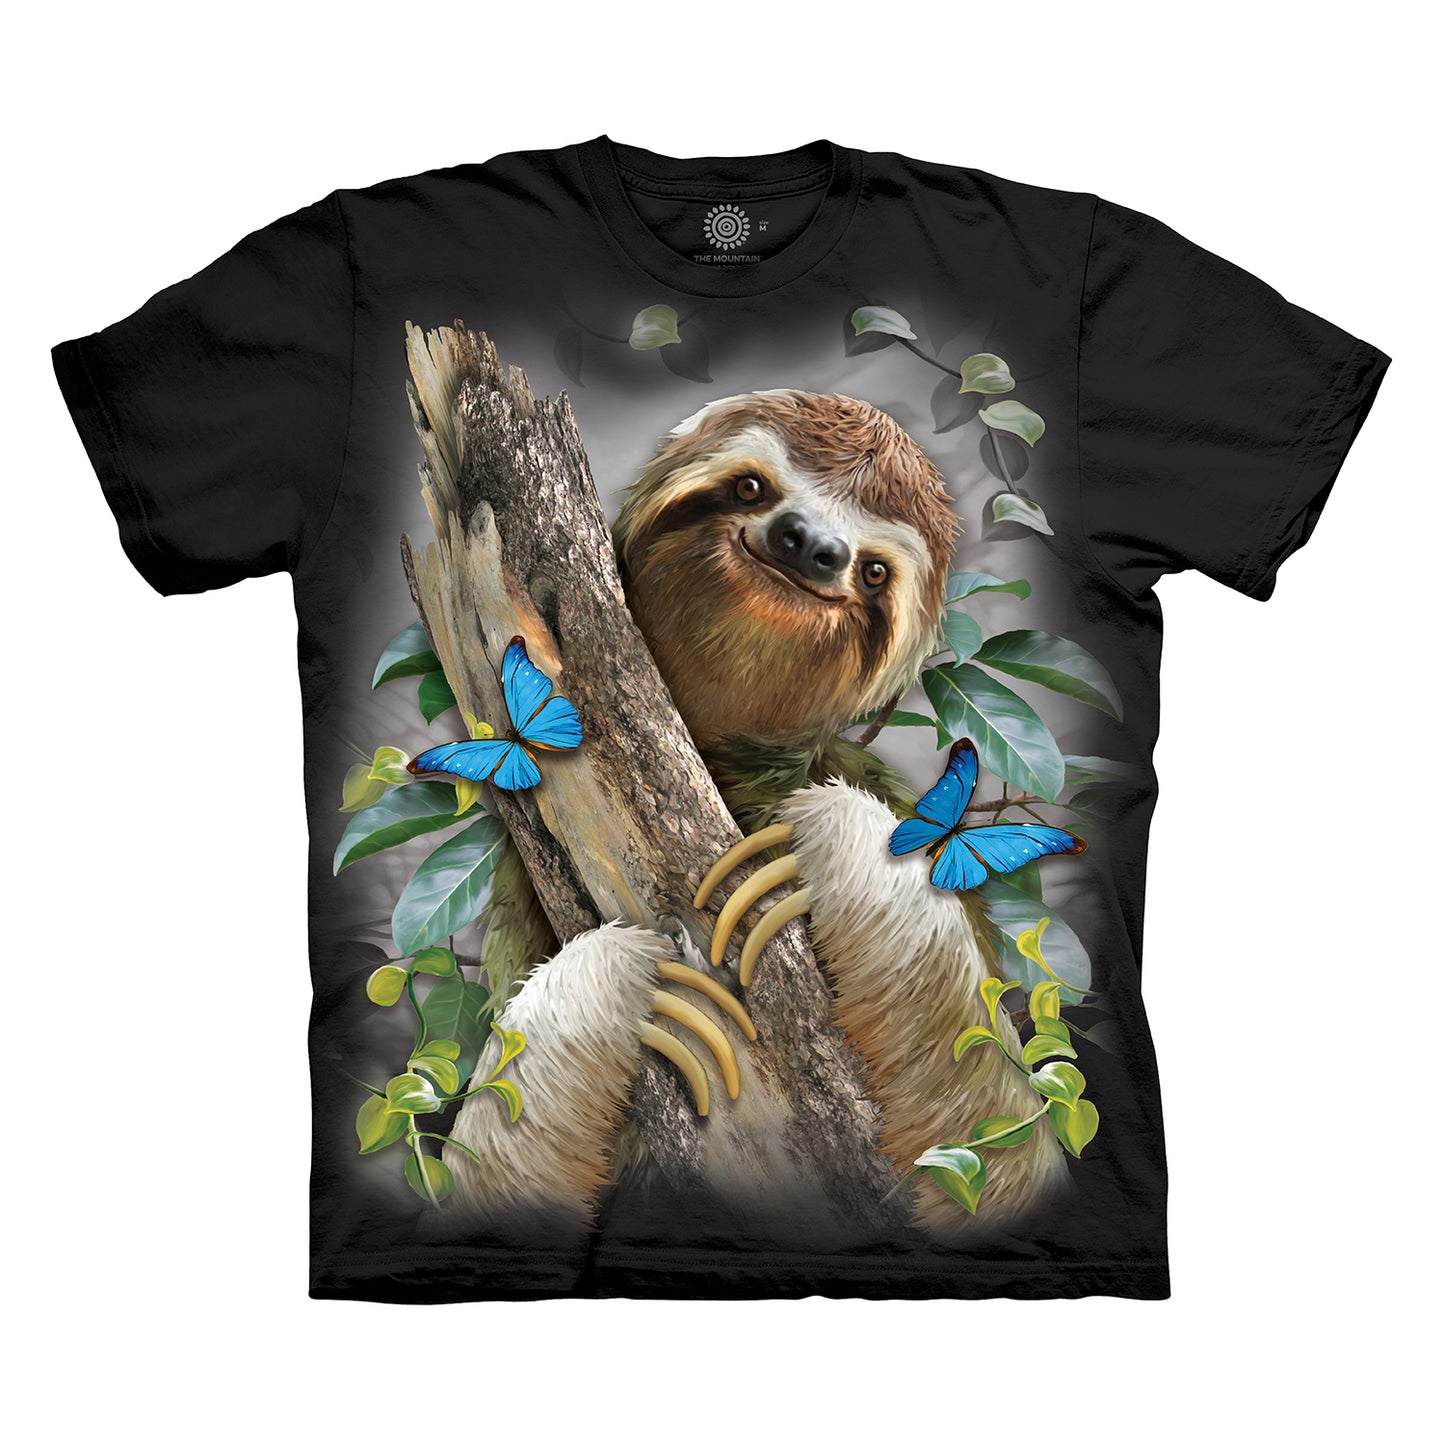 The Mountain Men's Sloth & Butterflies T-Shirt